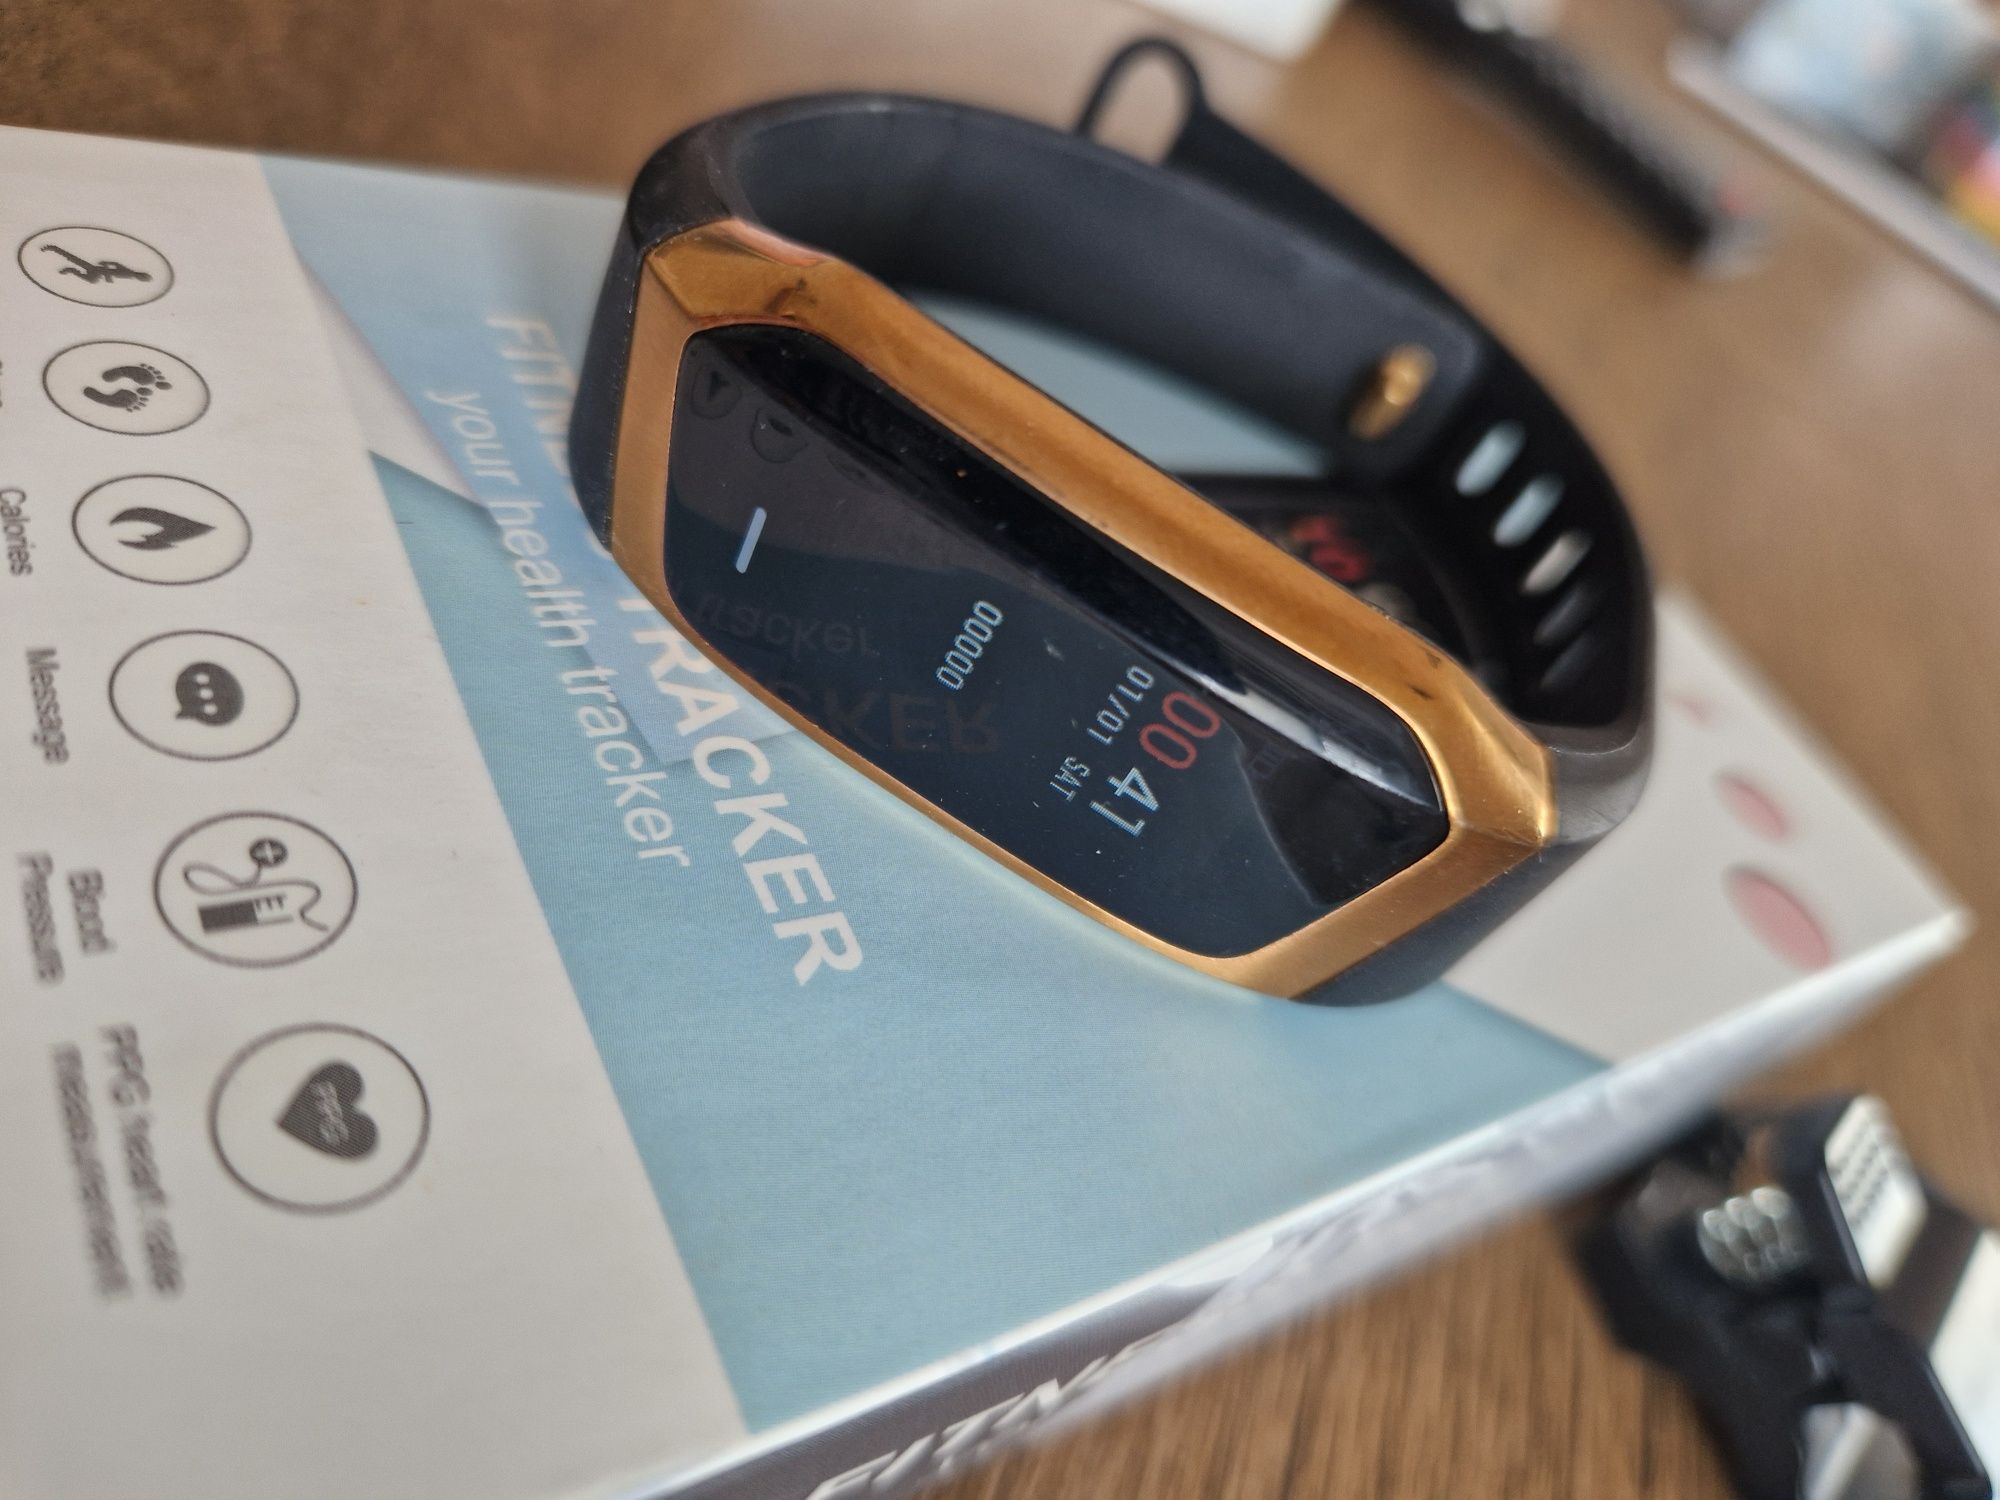 Smart watch fitness tracker